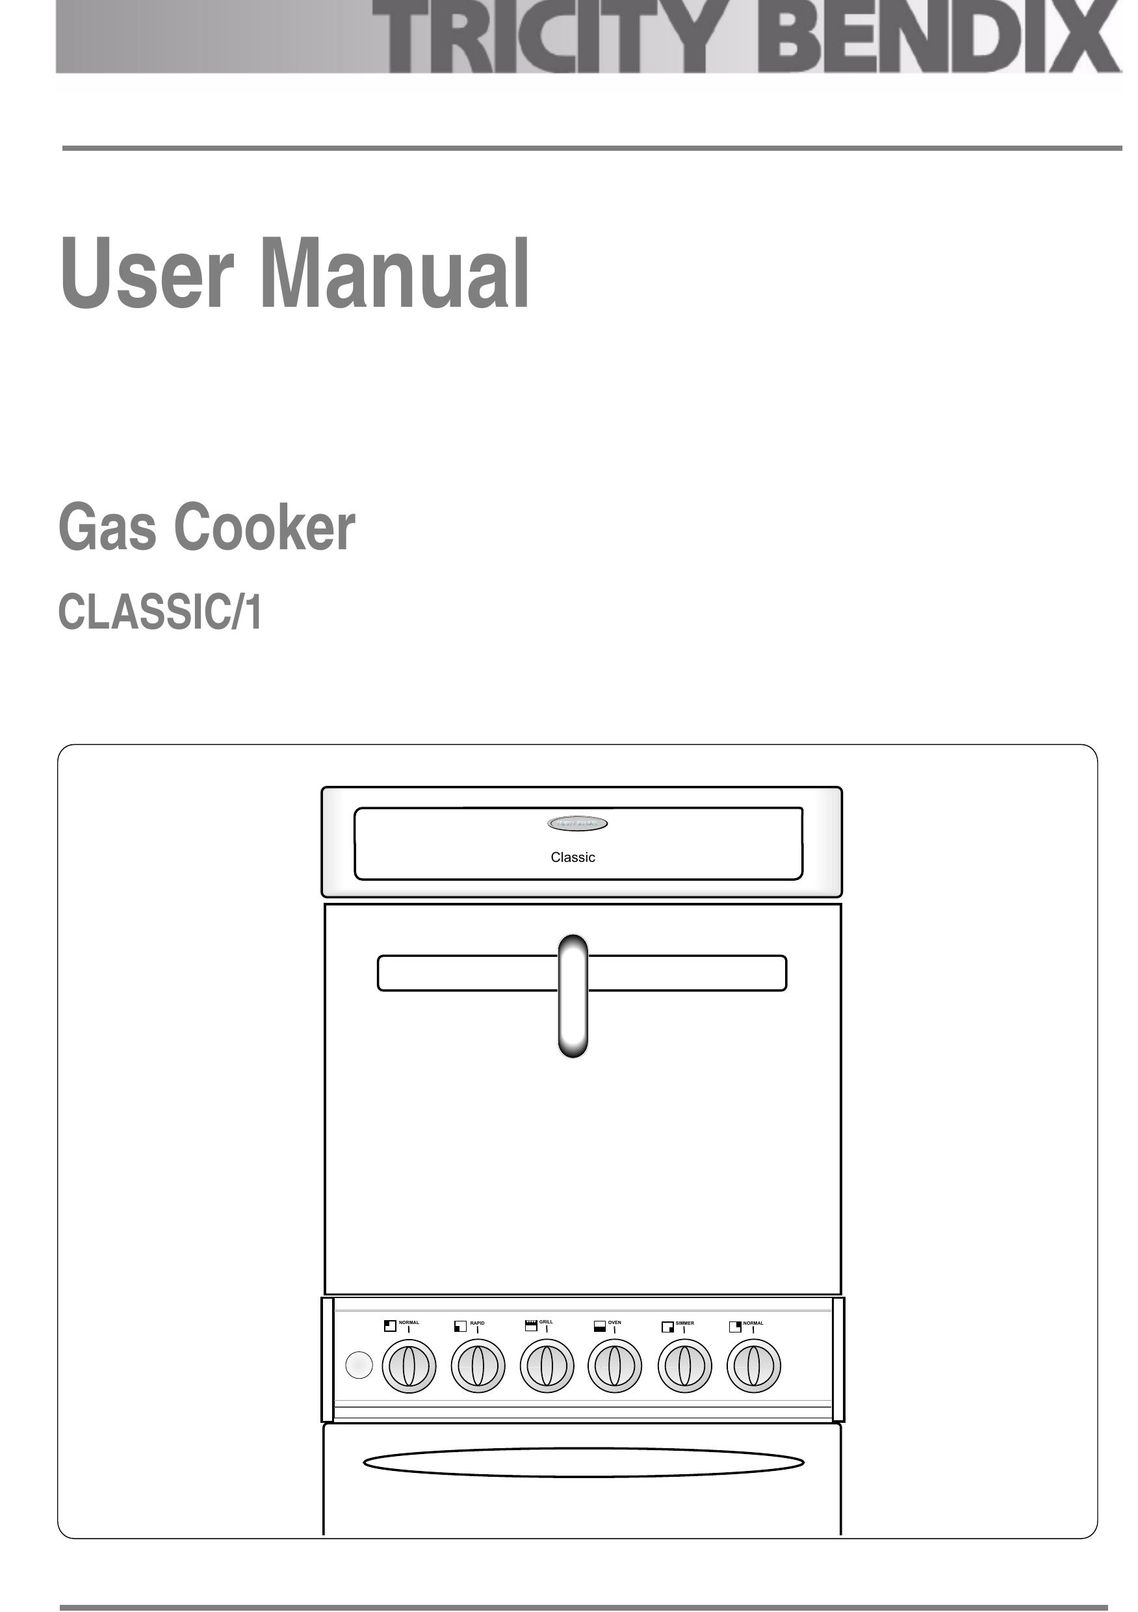 Tricity Bendix CLASSIC/1 Cooktop User Manual